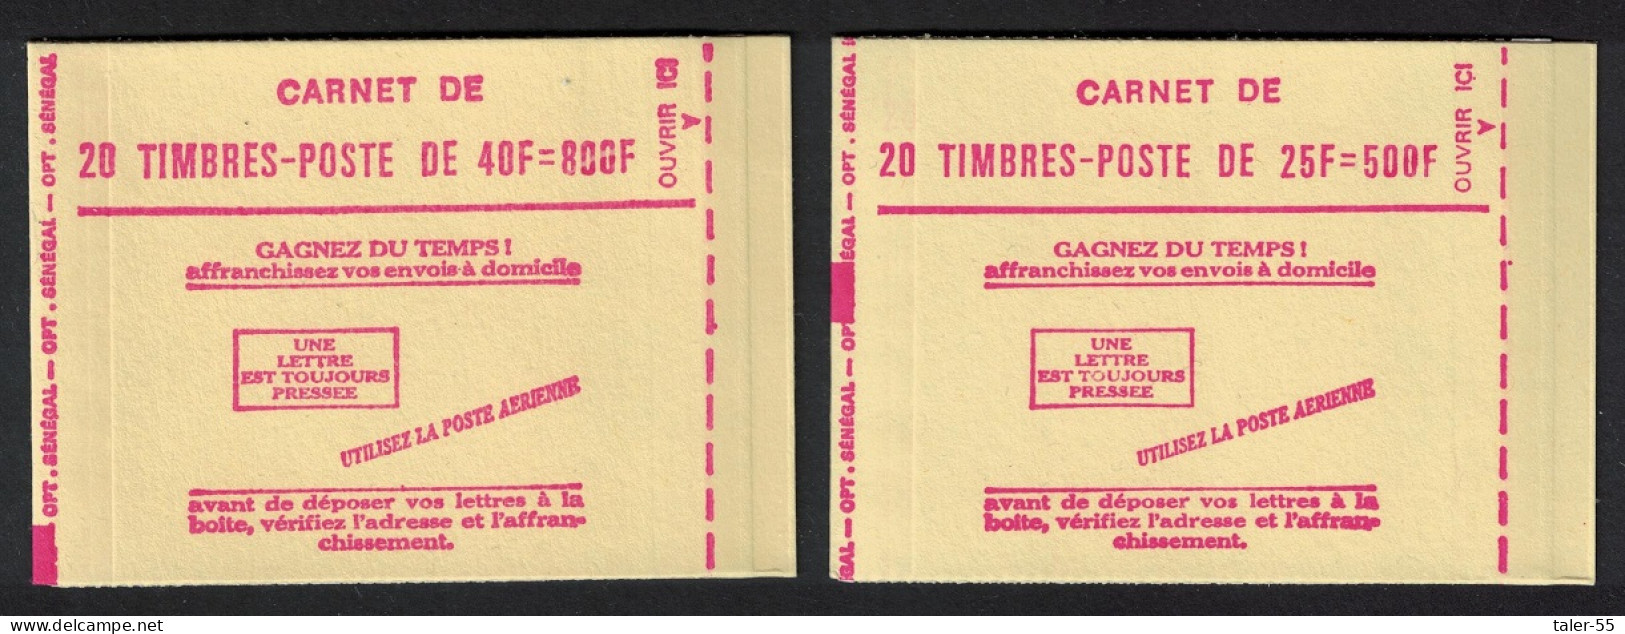 Senegal Senegalese Elegance 25f+40f BOOKLETS 20 SEALED EXTREMELY RARR 1972 MNH SG#503-504 MI#501-502 - Senegal (1960-...)